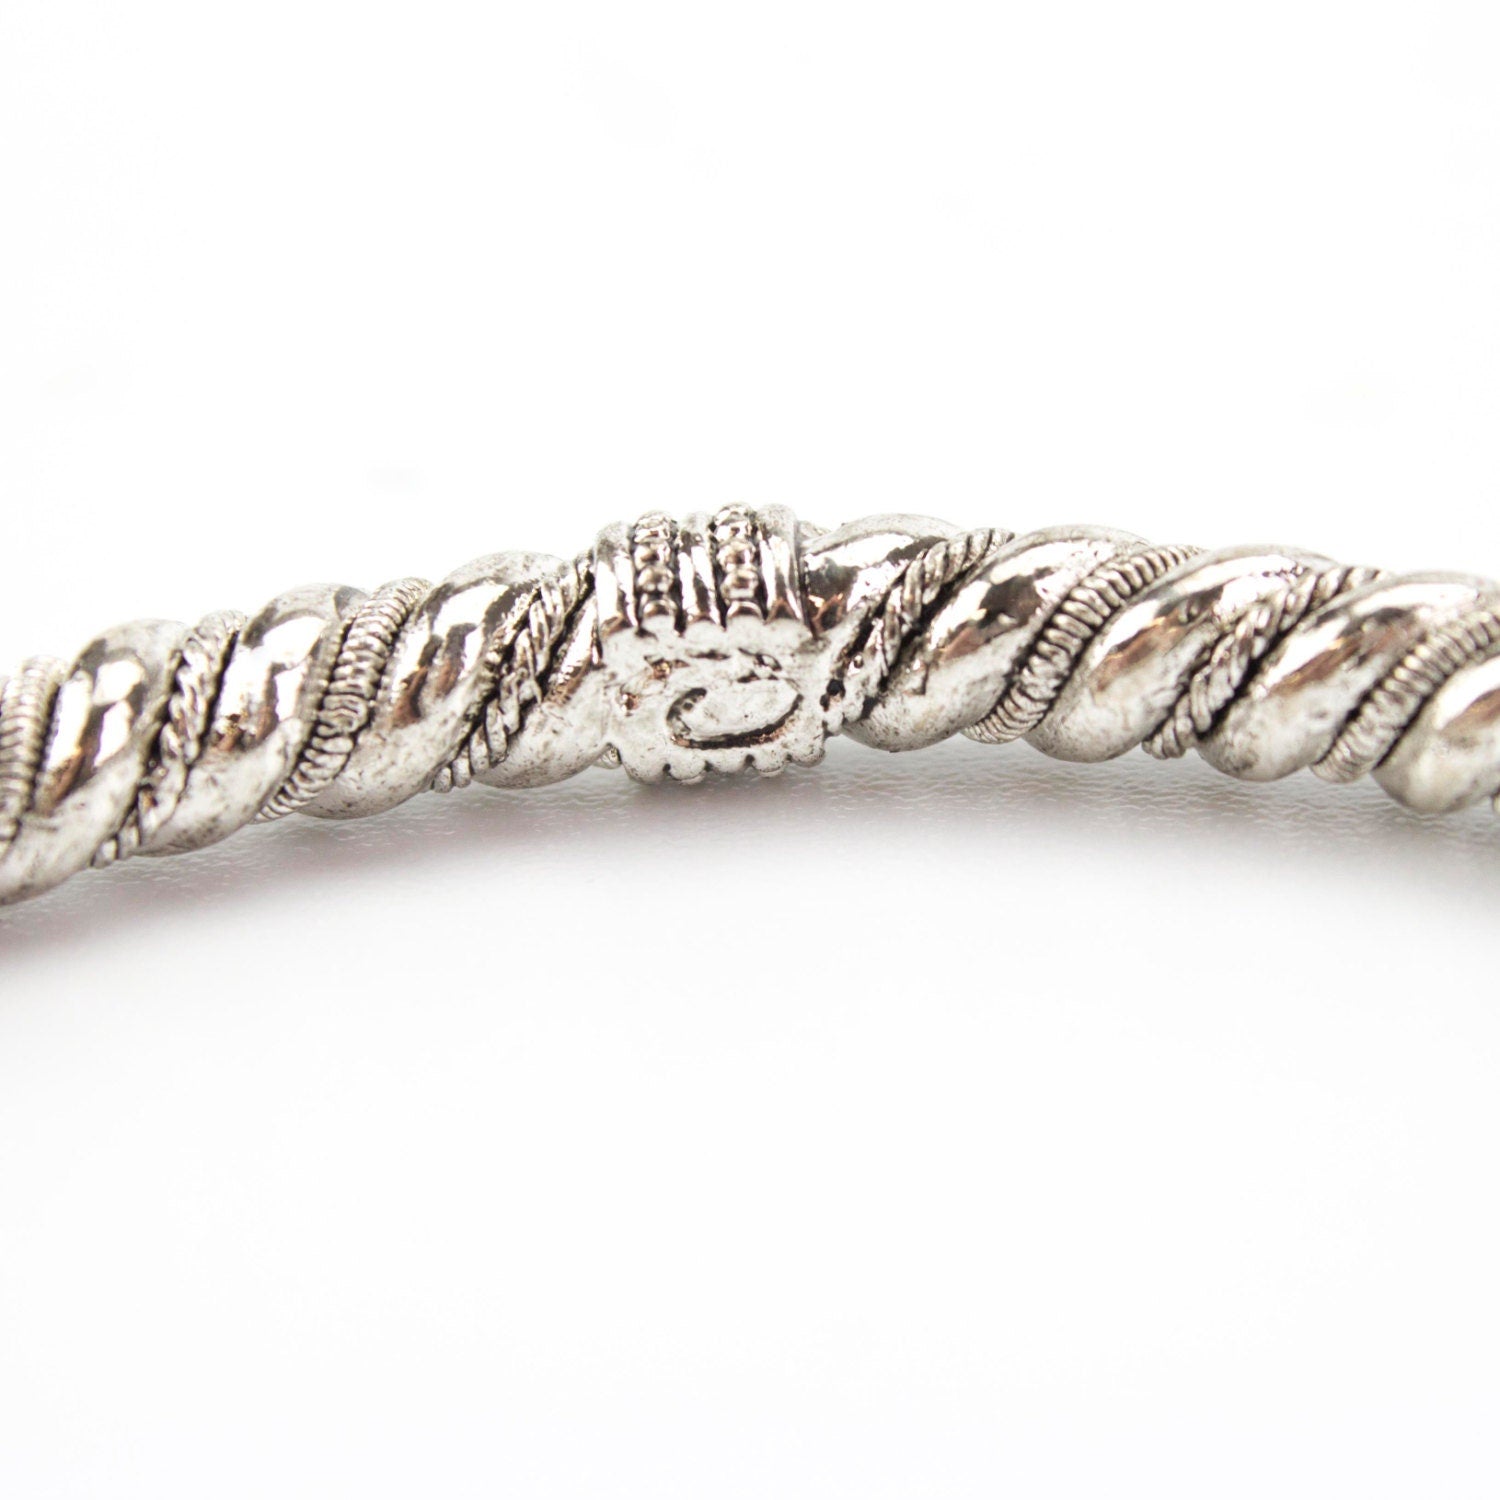 Vintage Ring Oscar De La Renta Textured Antique Silver Tone Bangle Womans Designer Jewelry #OS138 - Limited Stock - Never Worn